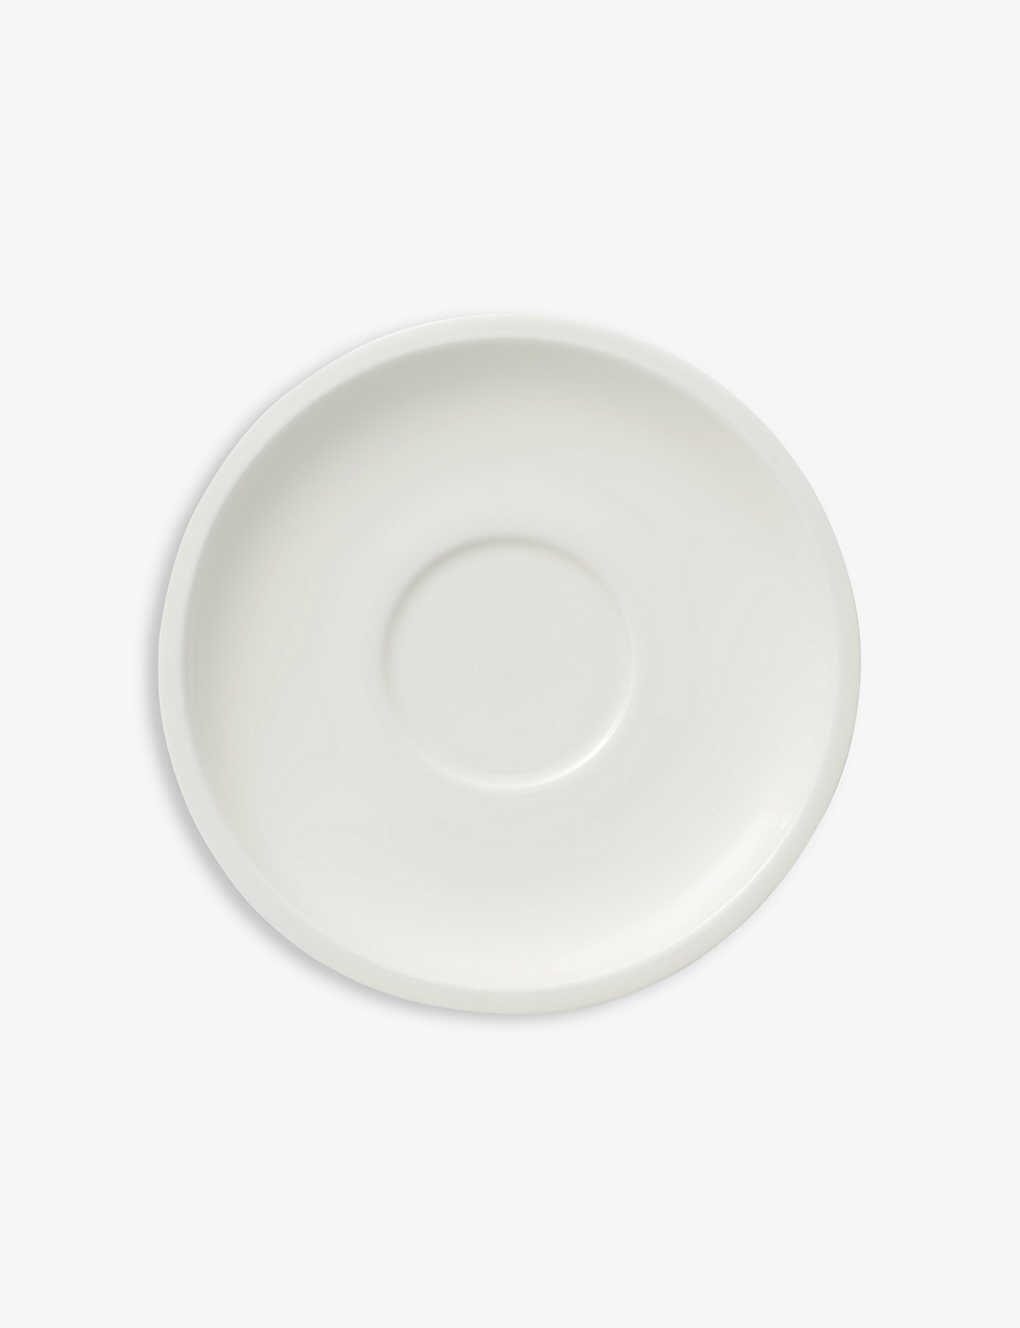 Villeroy & Boch Artesano Original Porcelain Saucer Plate 16cm